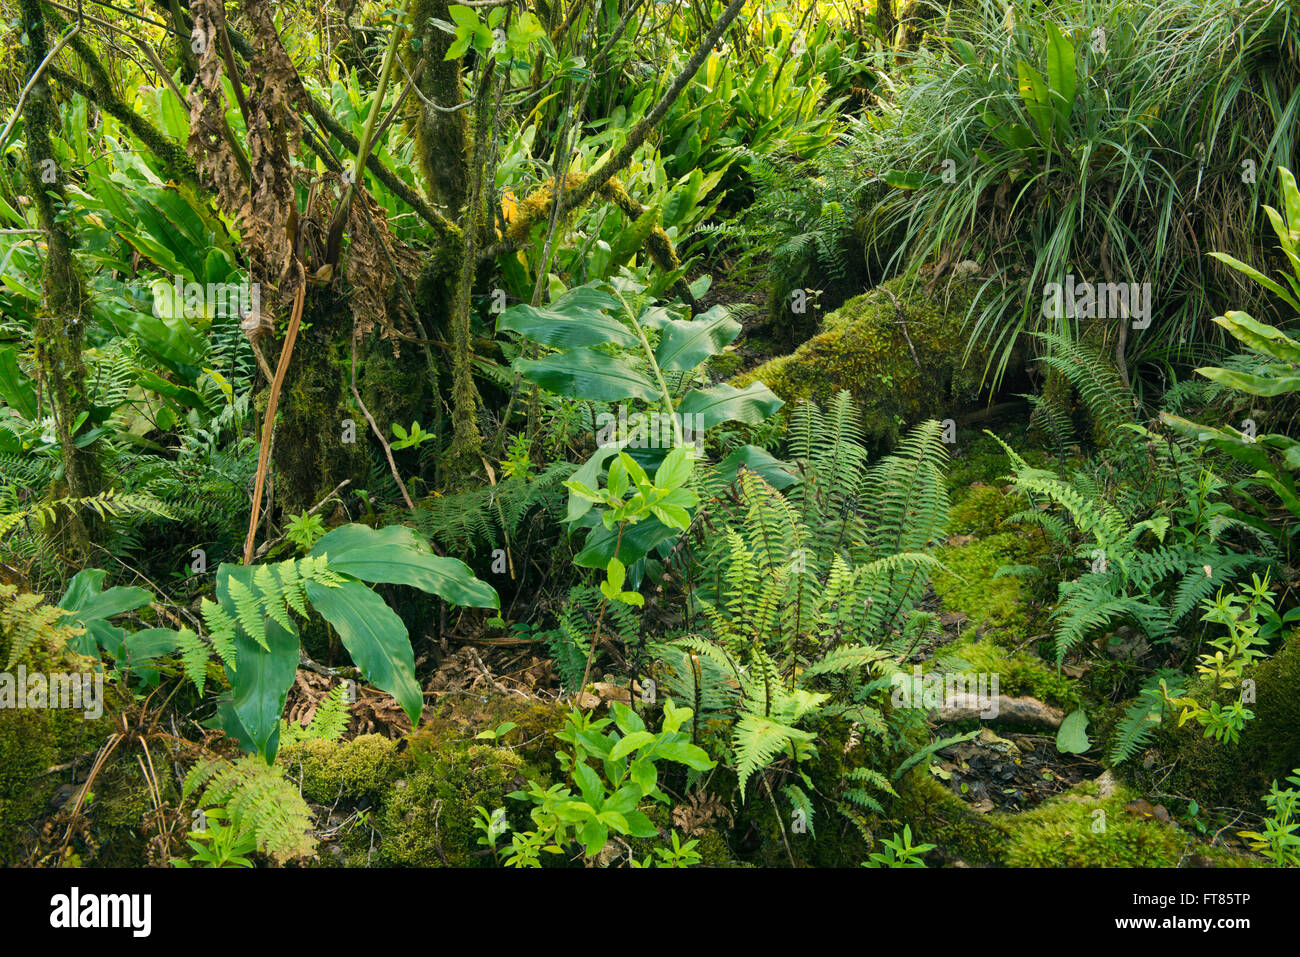 Mossy bosque montano de Alaka'i pantano, hogar de algunos de los últimos endémicos de aves de Hawai, Kauai Hawaii Foto de stock